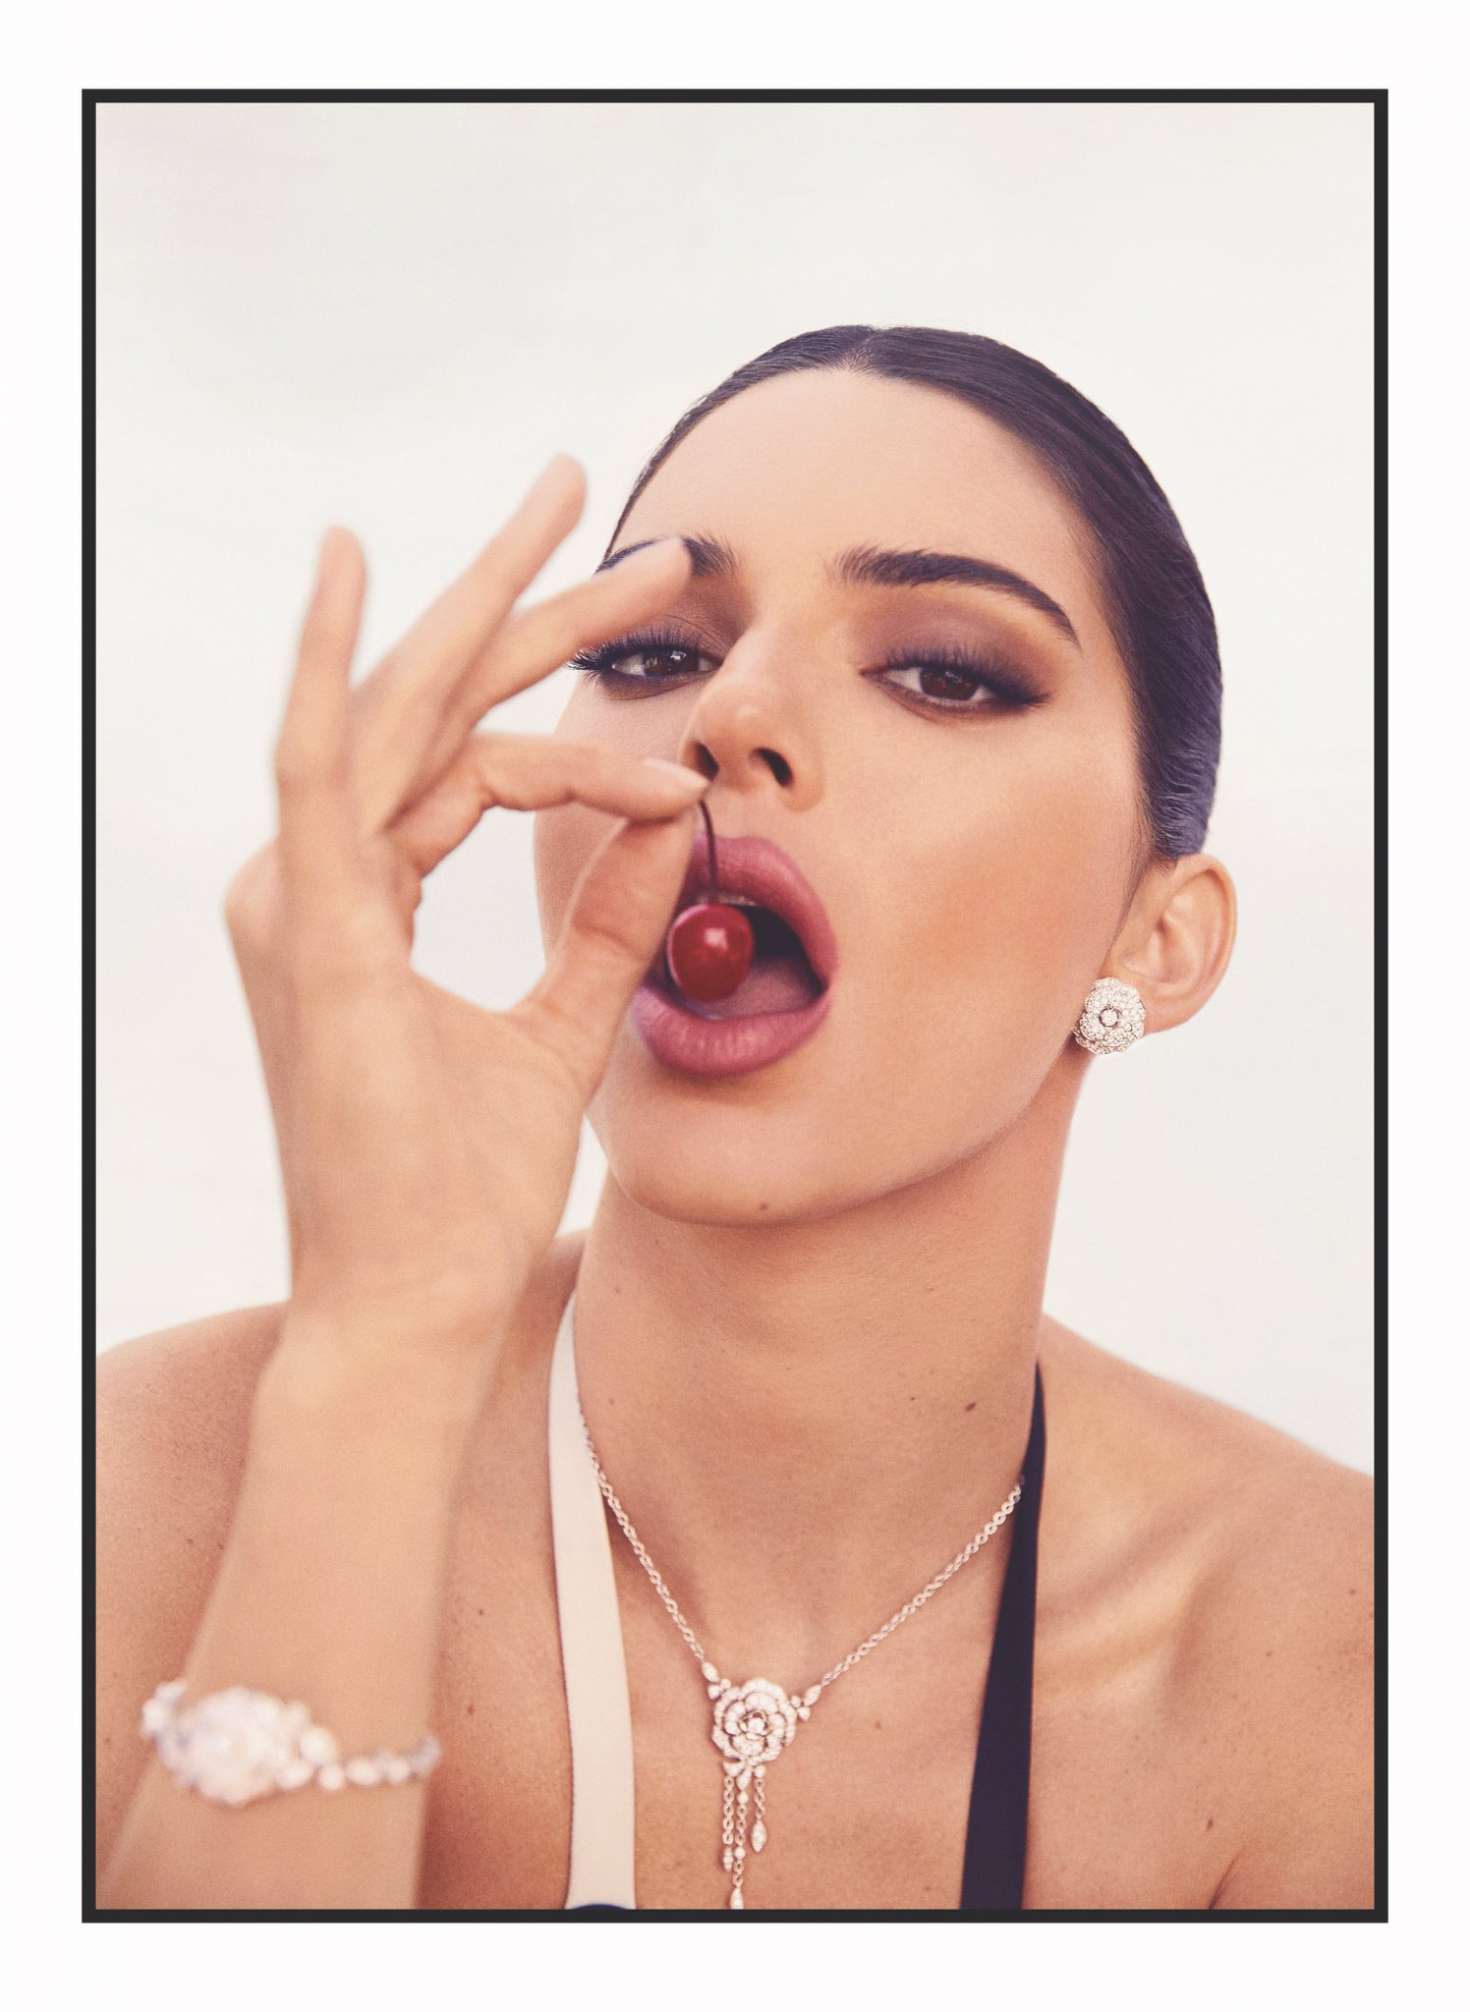 Kendall Jenner â€“ Chaos SixtyNine Poster Book by Danielle Levitt 2018